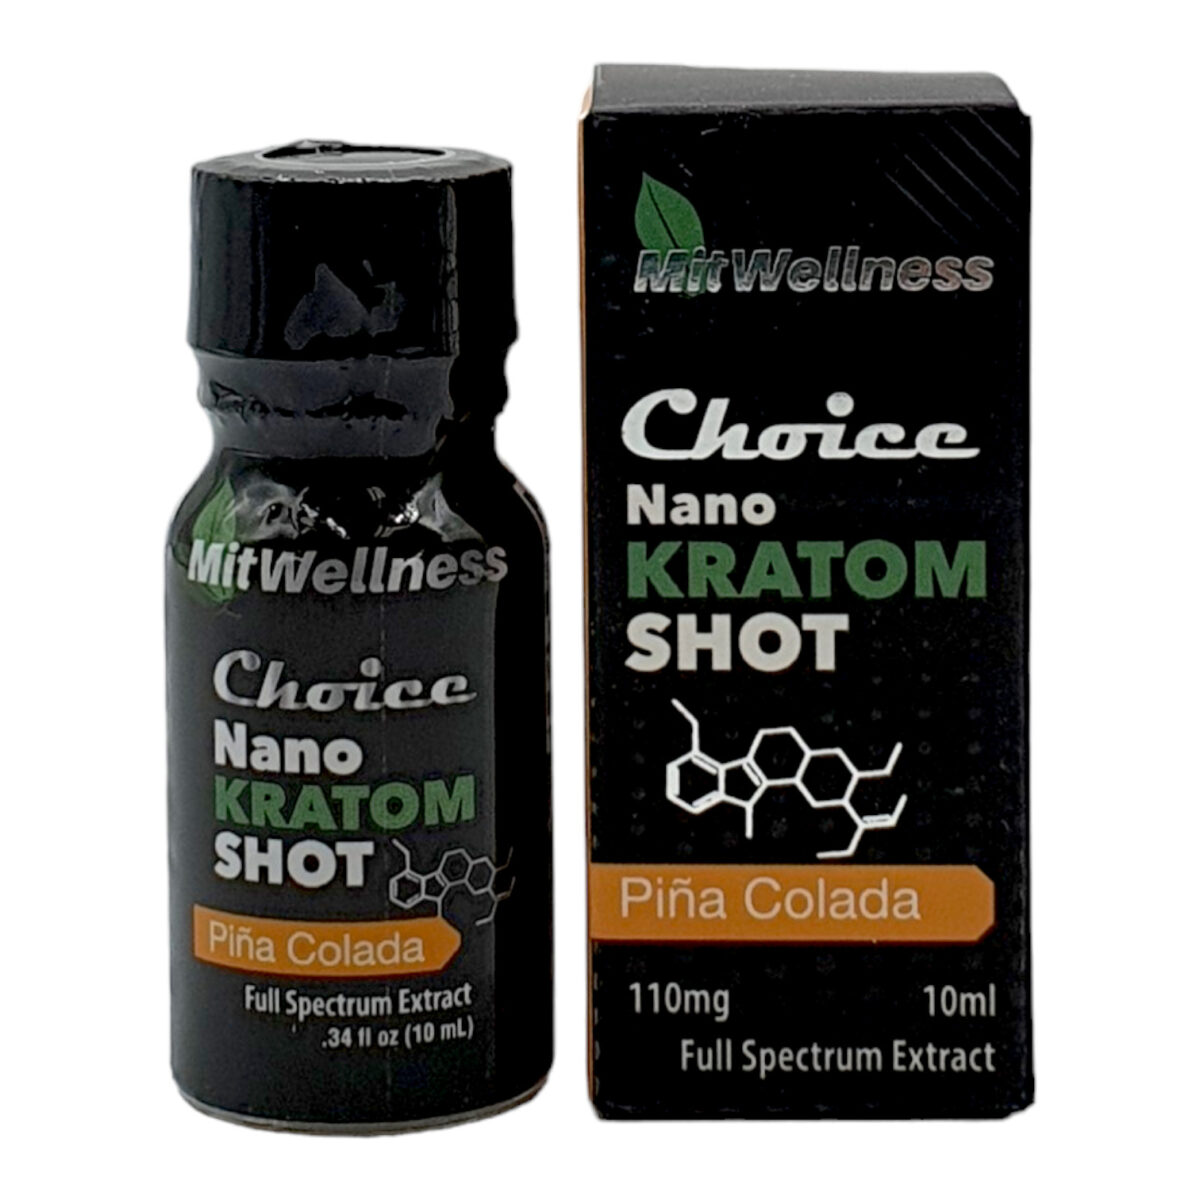 Mit Wellness Choice NANO Pina Colada Kratom Shot – 10ml